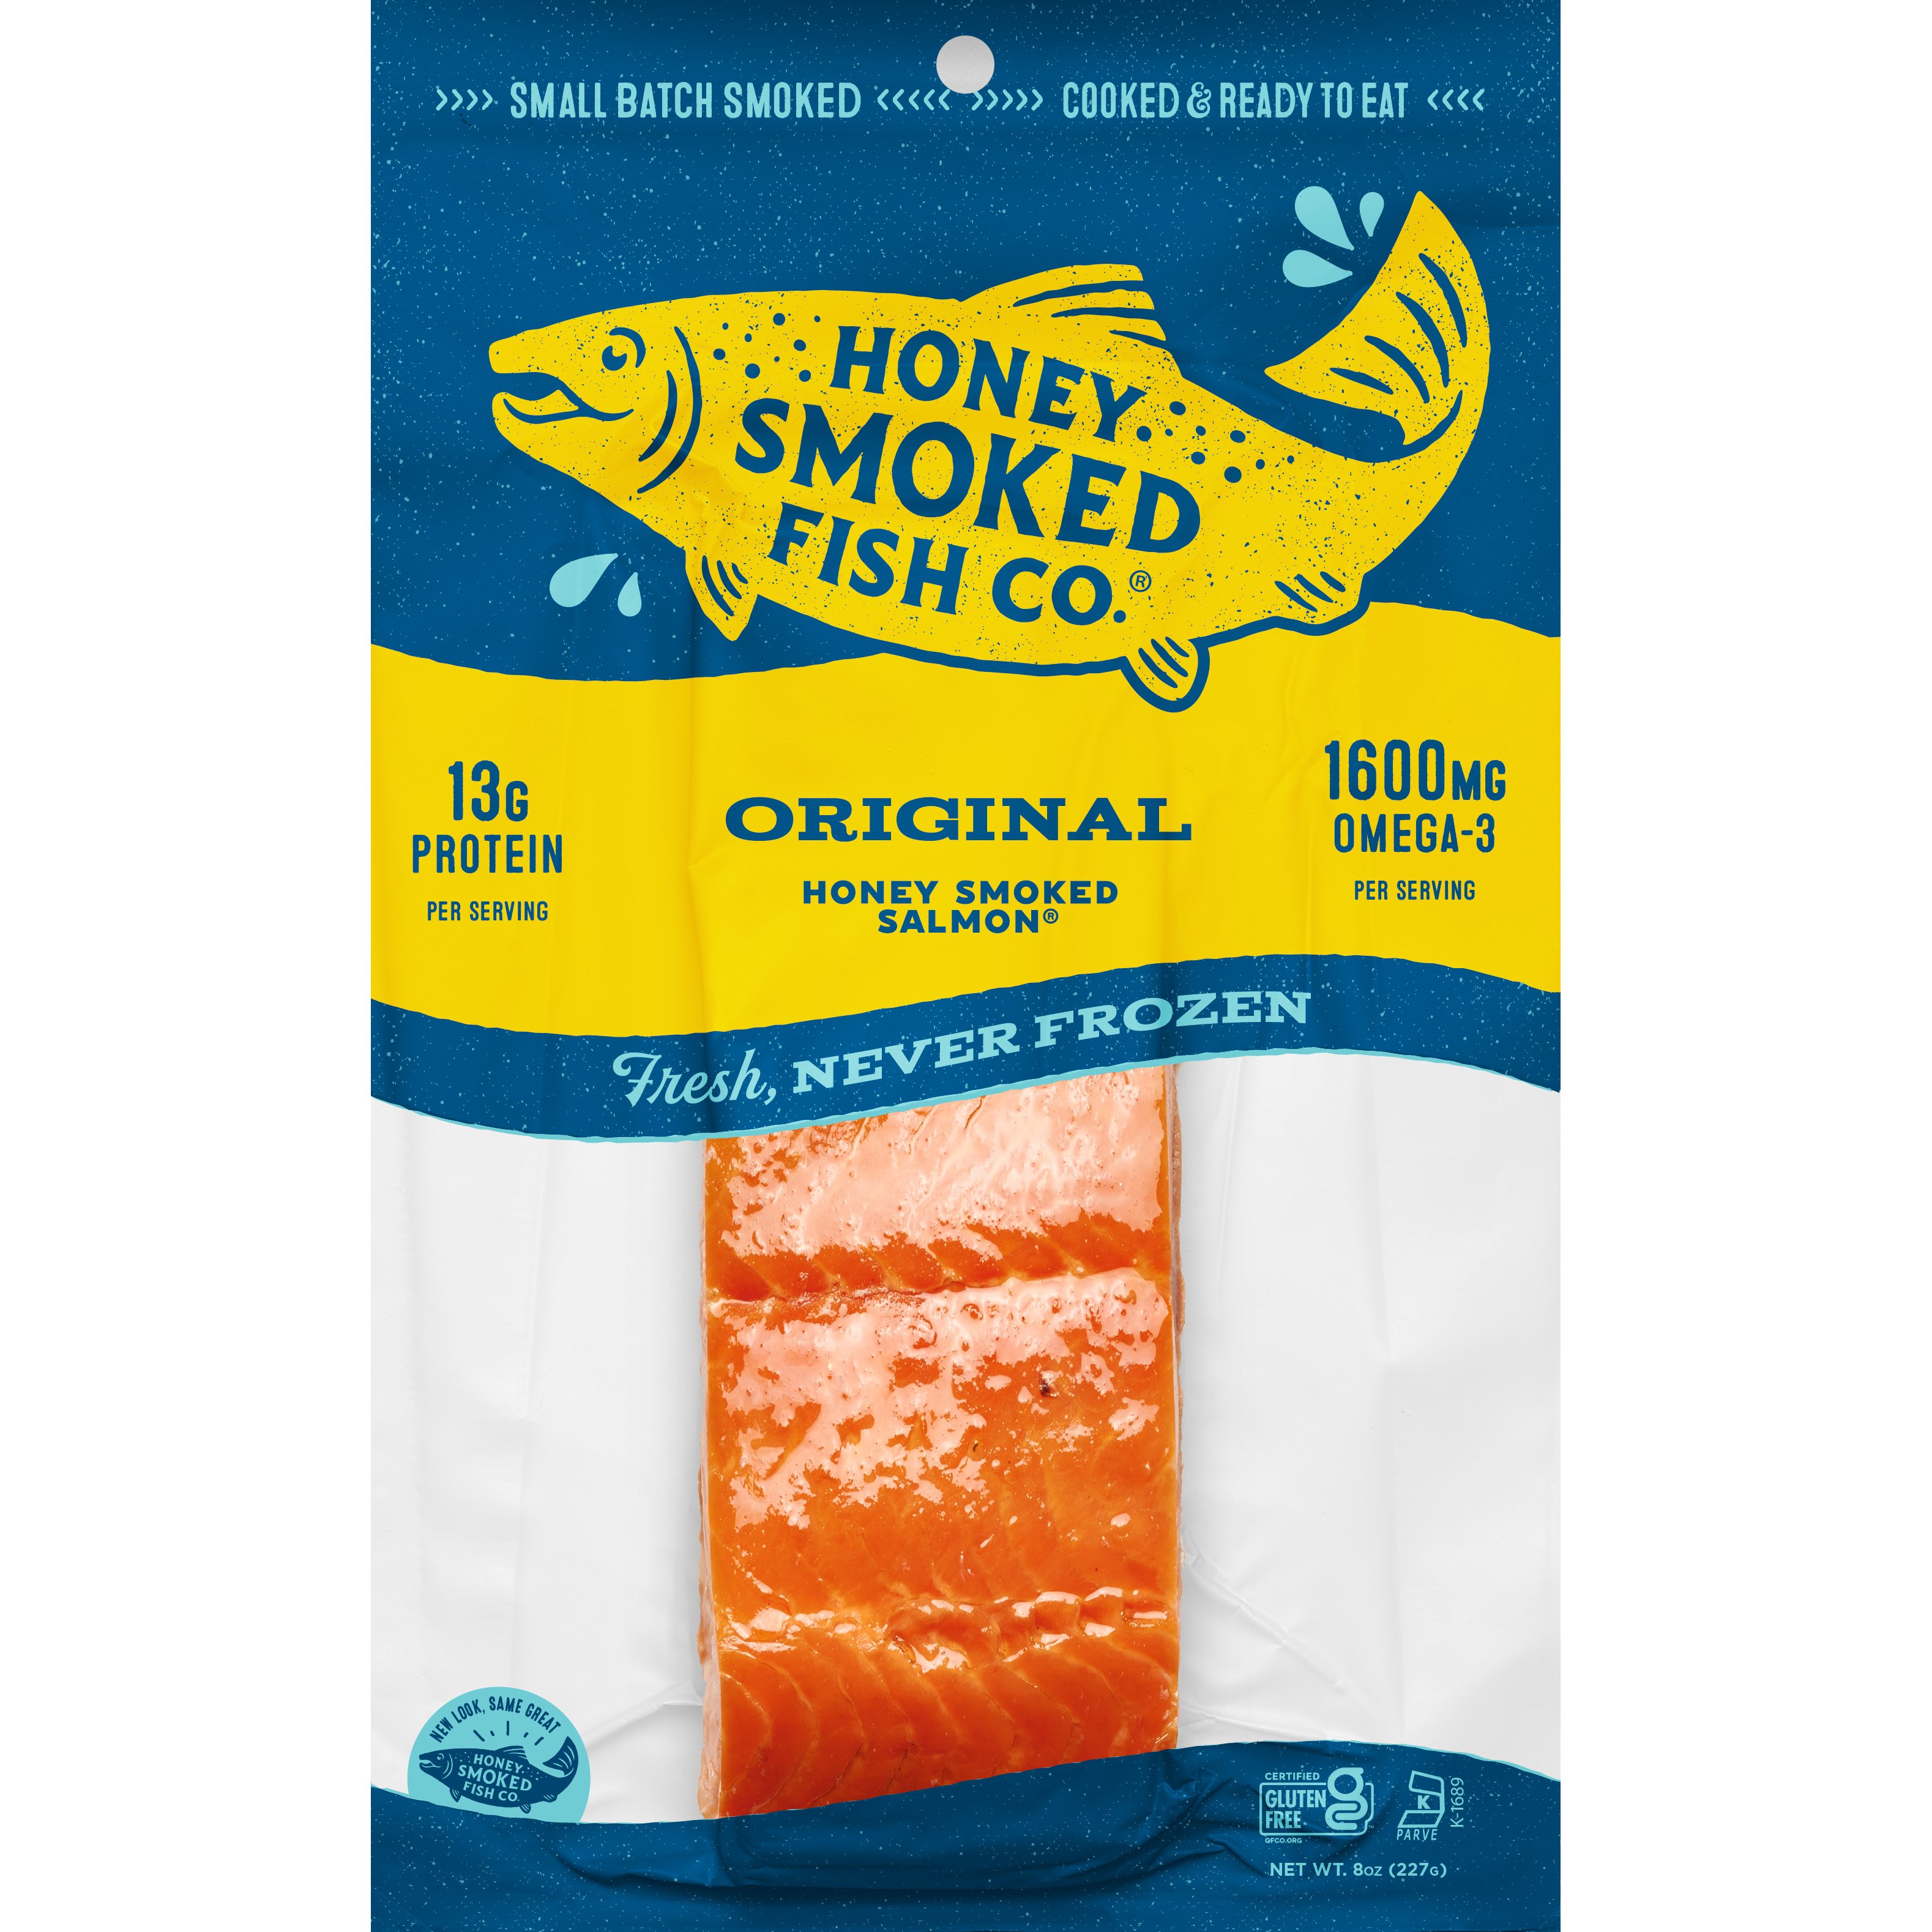 Honey Smoked Fish Co. Honey Smoked Salmon - Original - Shop Fish